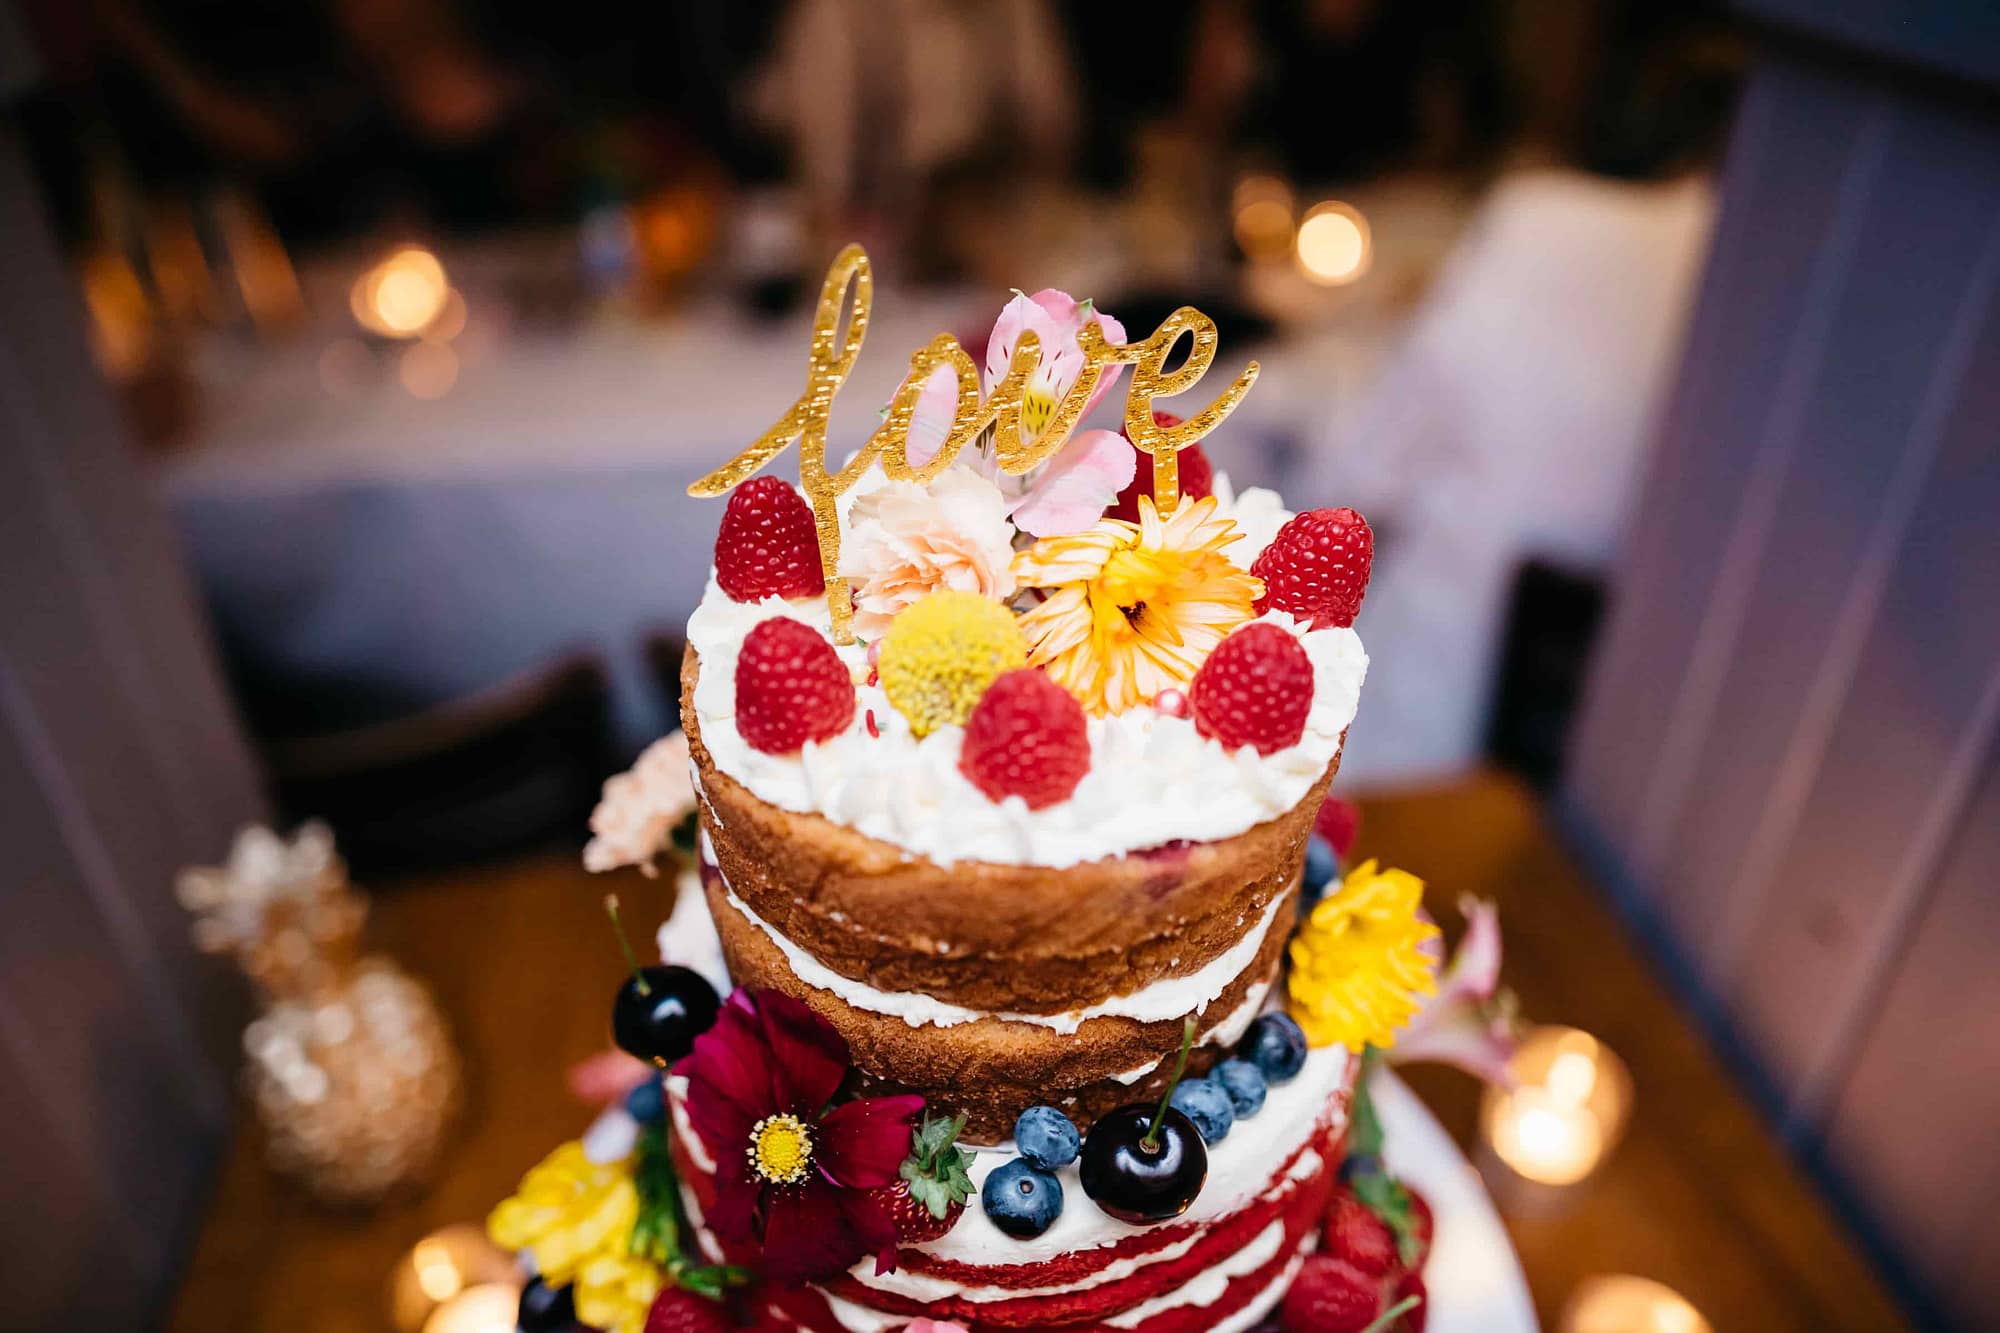 honeycomb cakes brighton, wedding cake